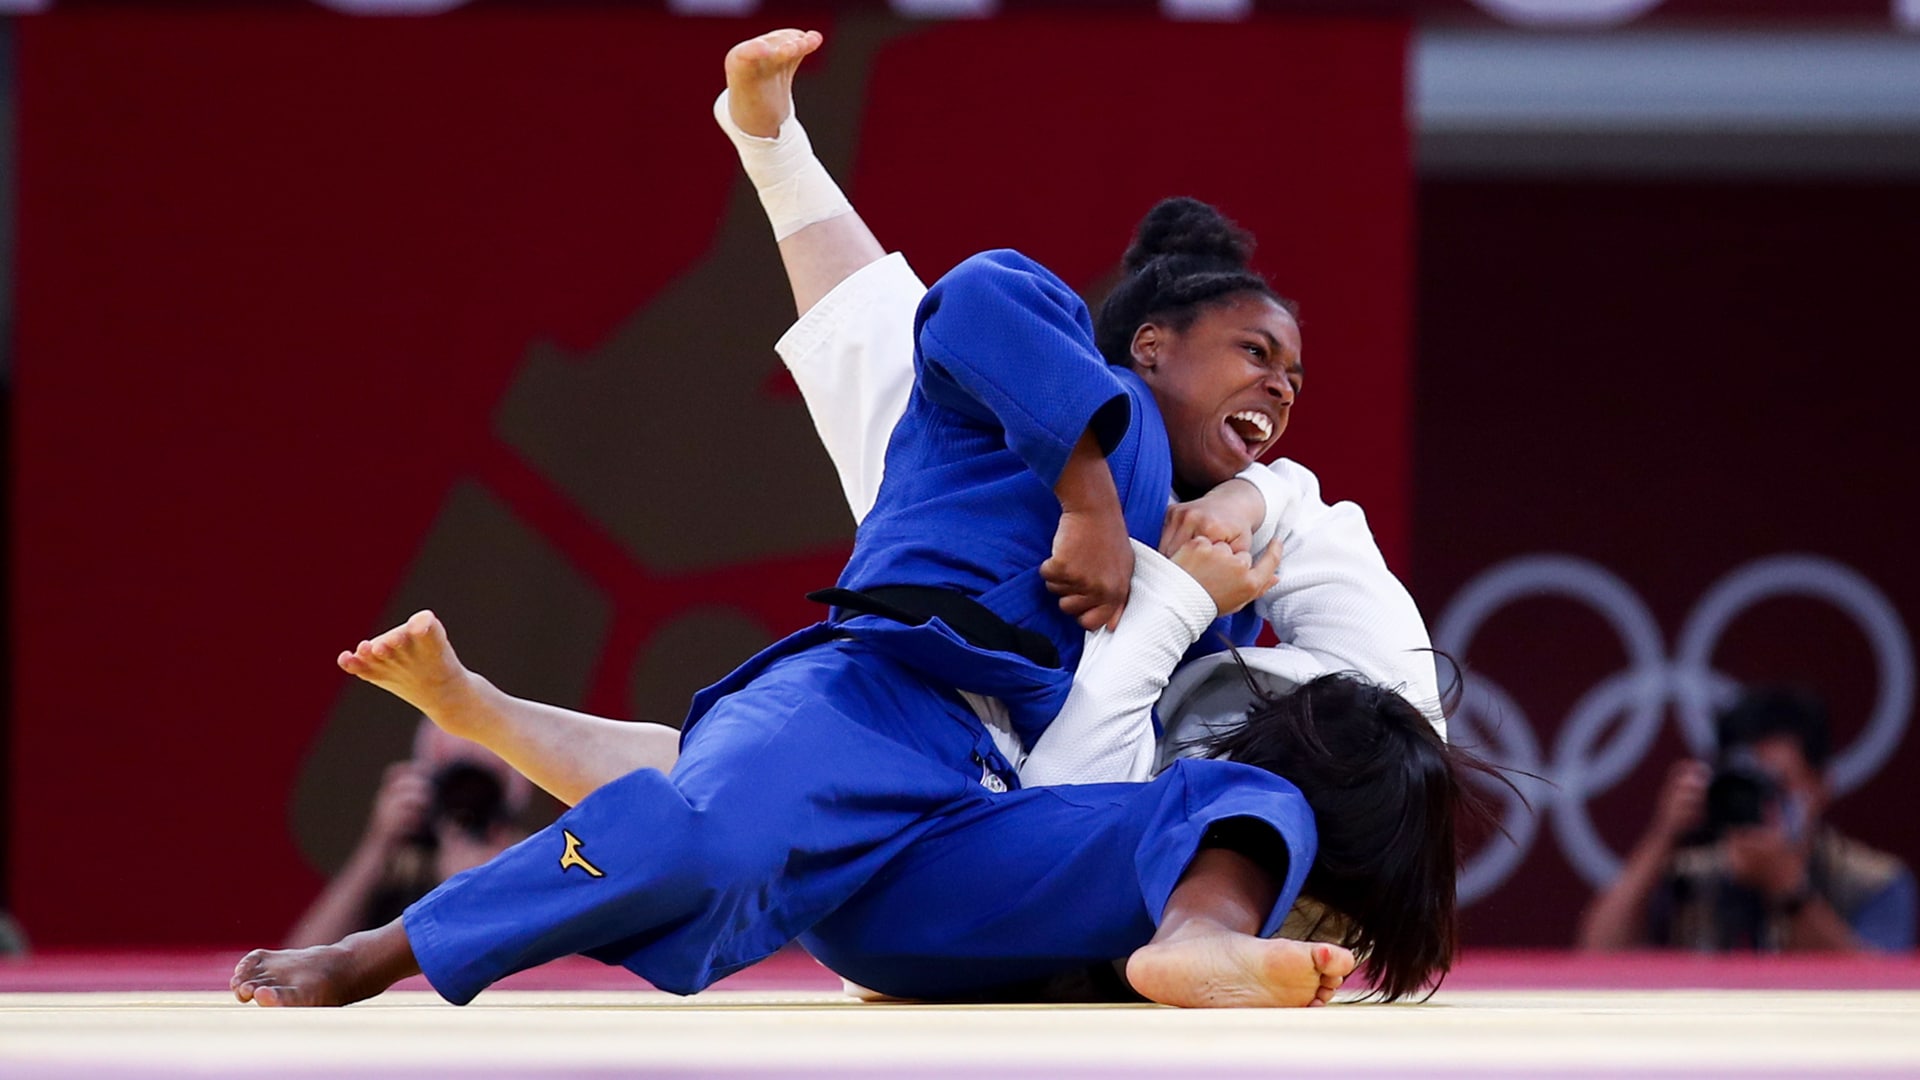 Judo at the 2024 Paris Olympic Games